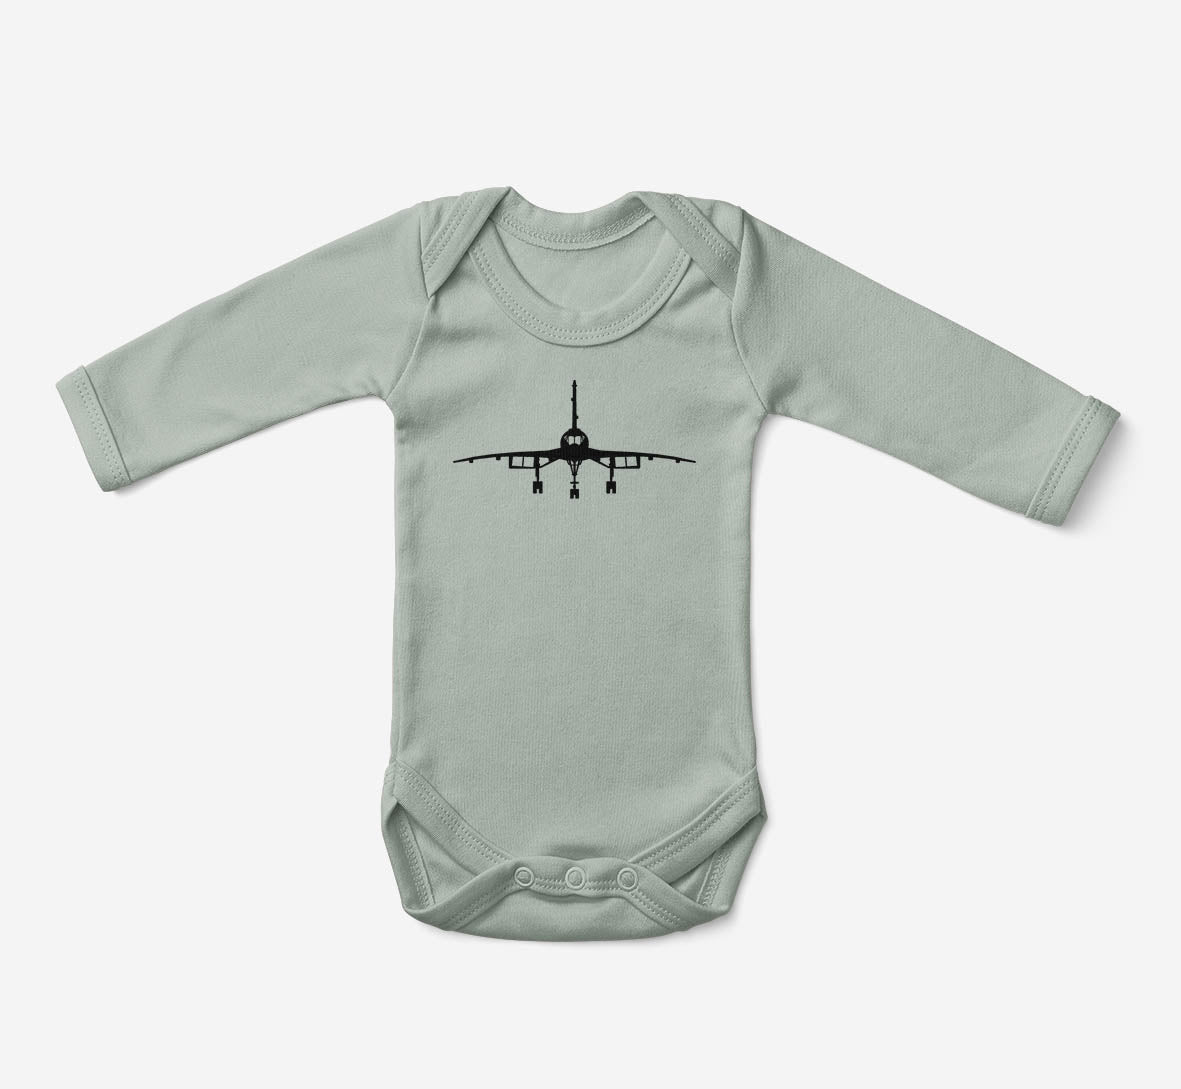 Concorde Silhouette Designed Baby Bodysuits